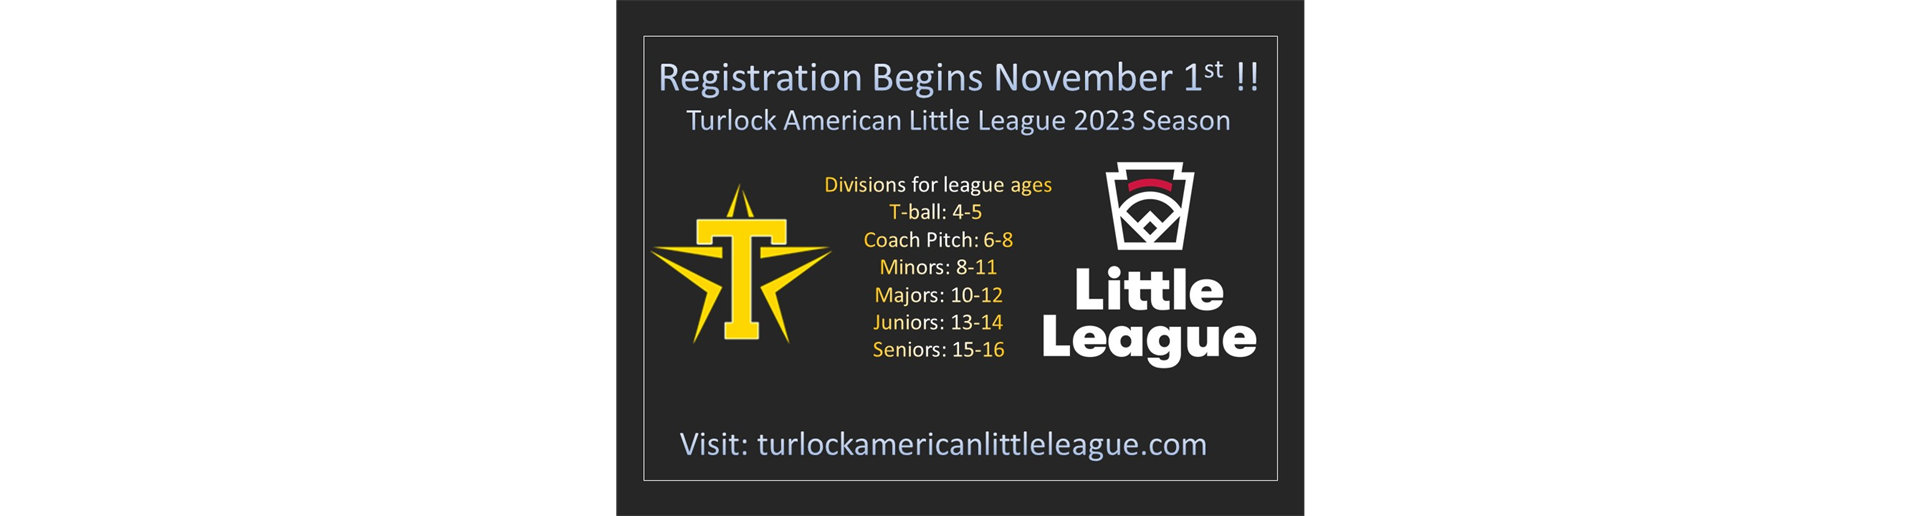 2023 Season Registration Begins November 1st!